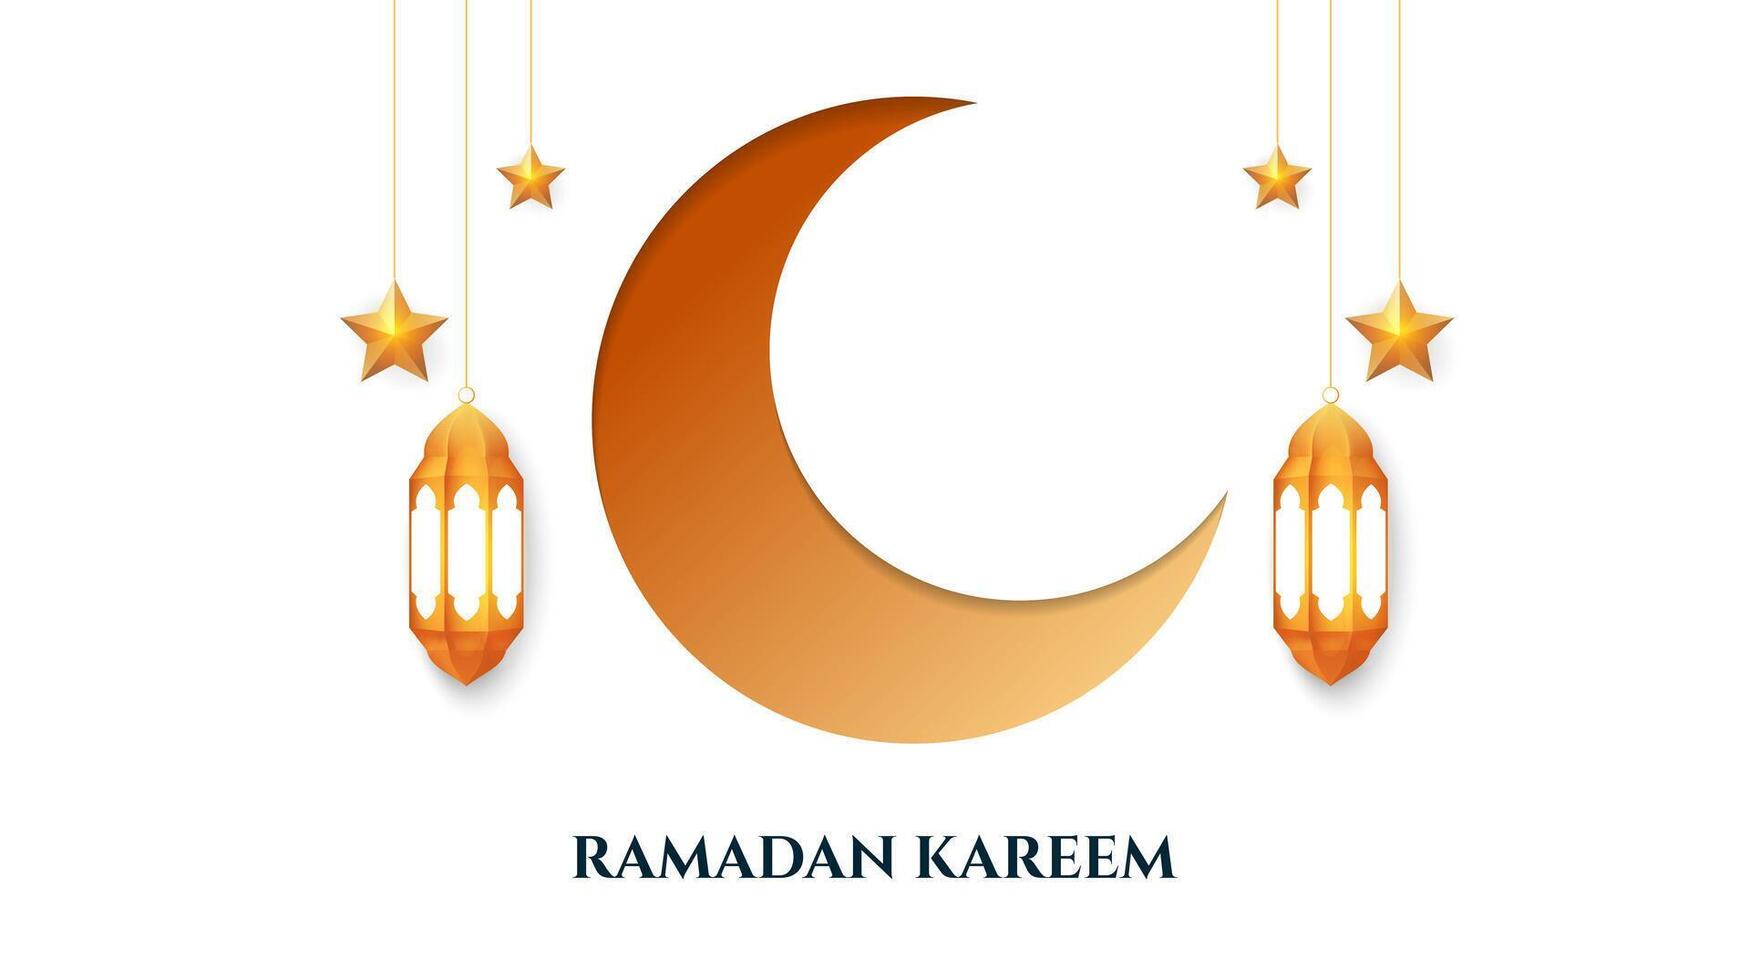 Ramadan kareem islamic background design. Illustration vector